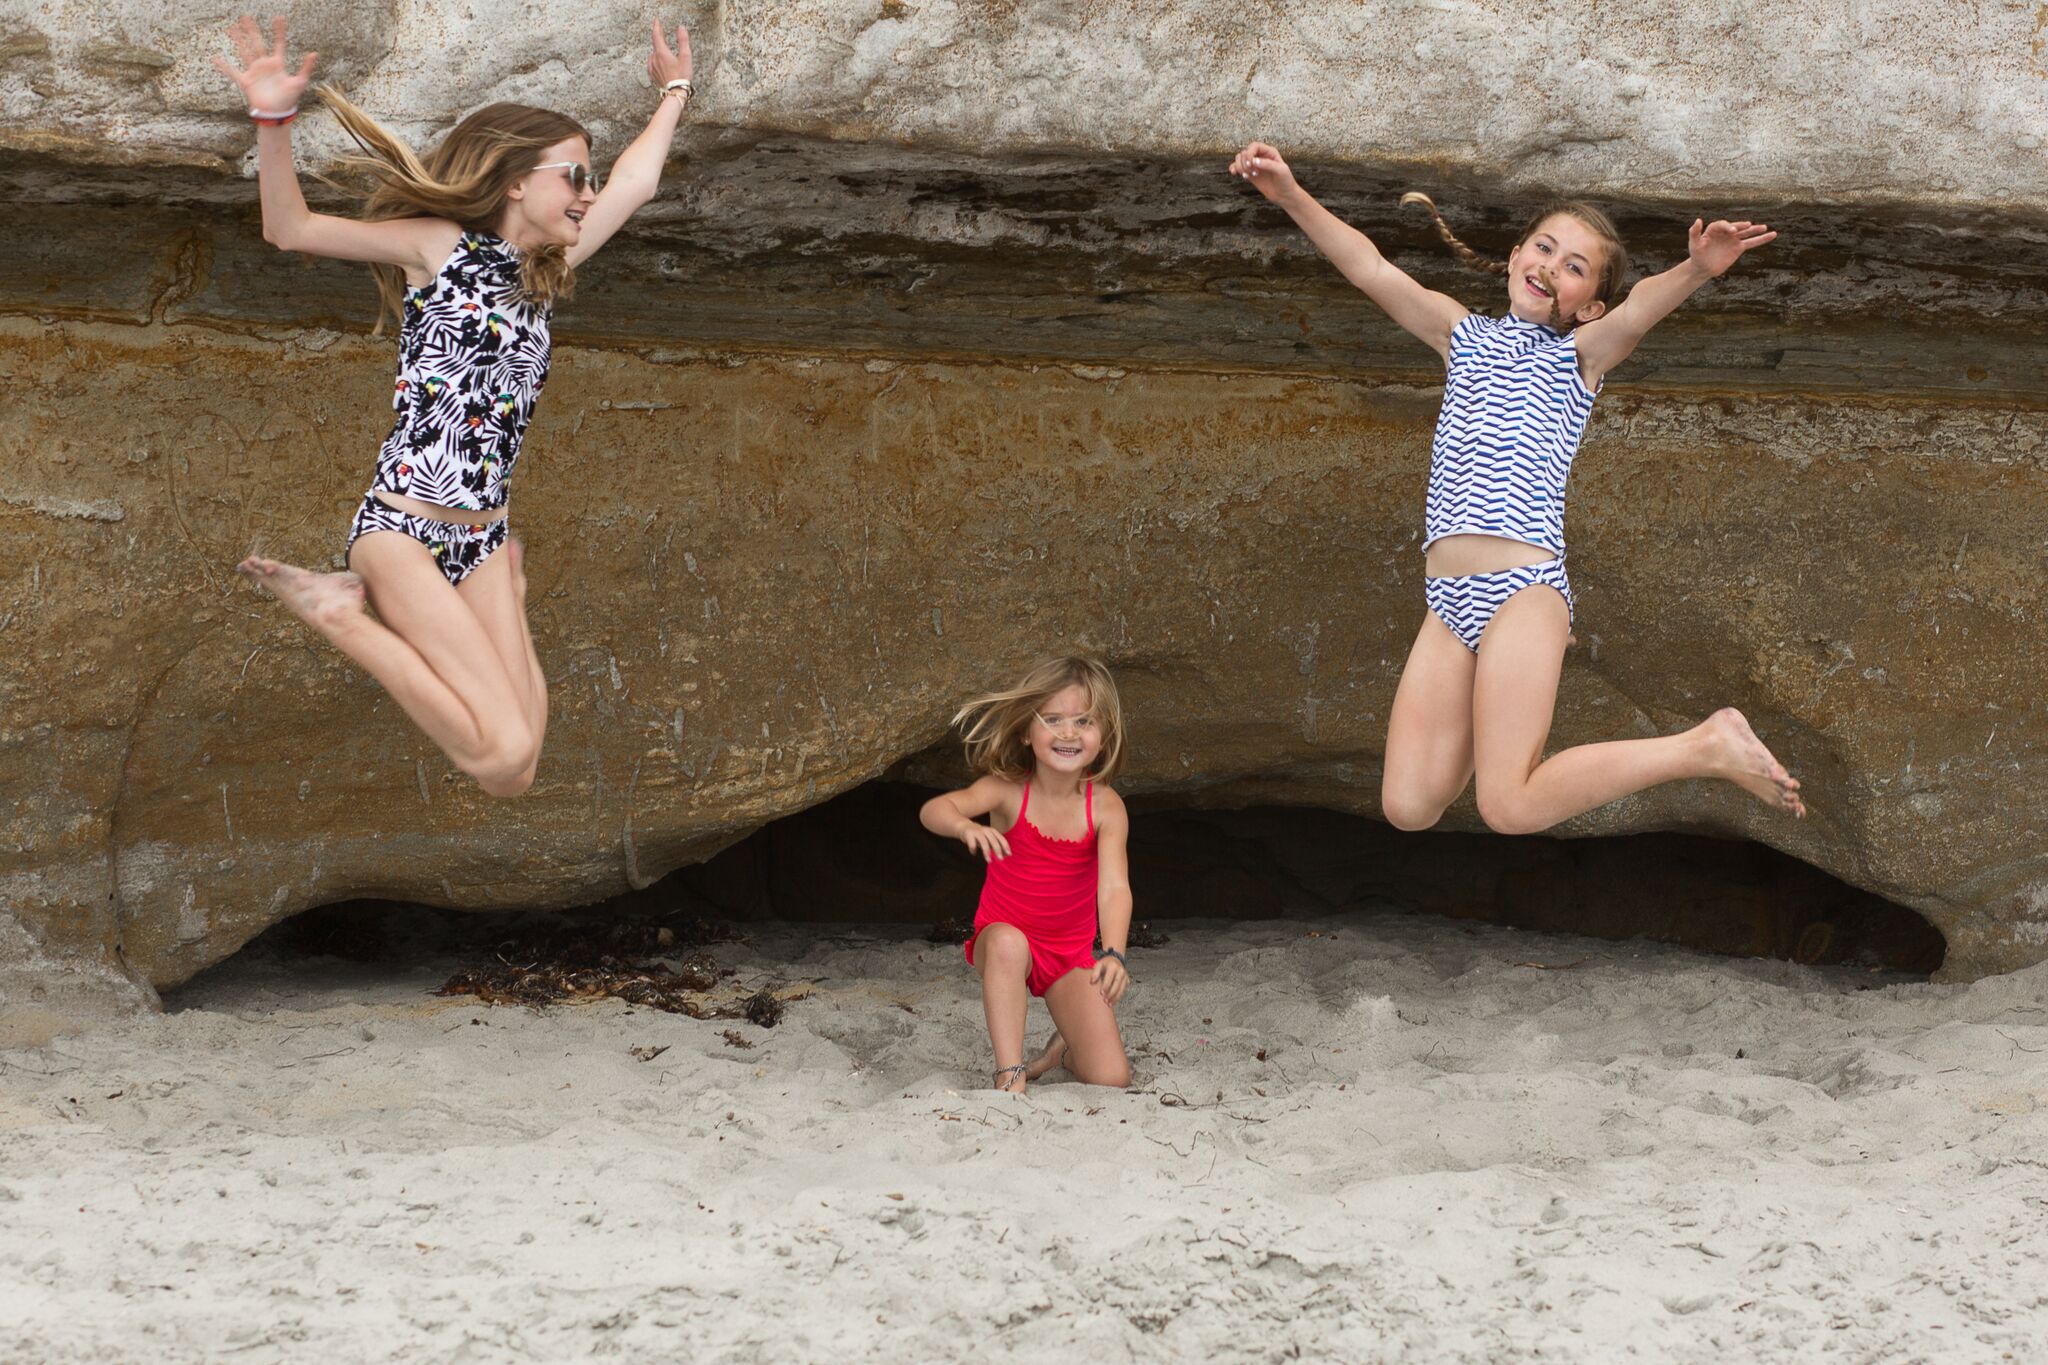 Lisa Allen's kids wearing modest one piece swim suits 